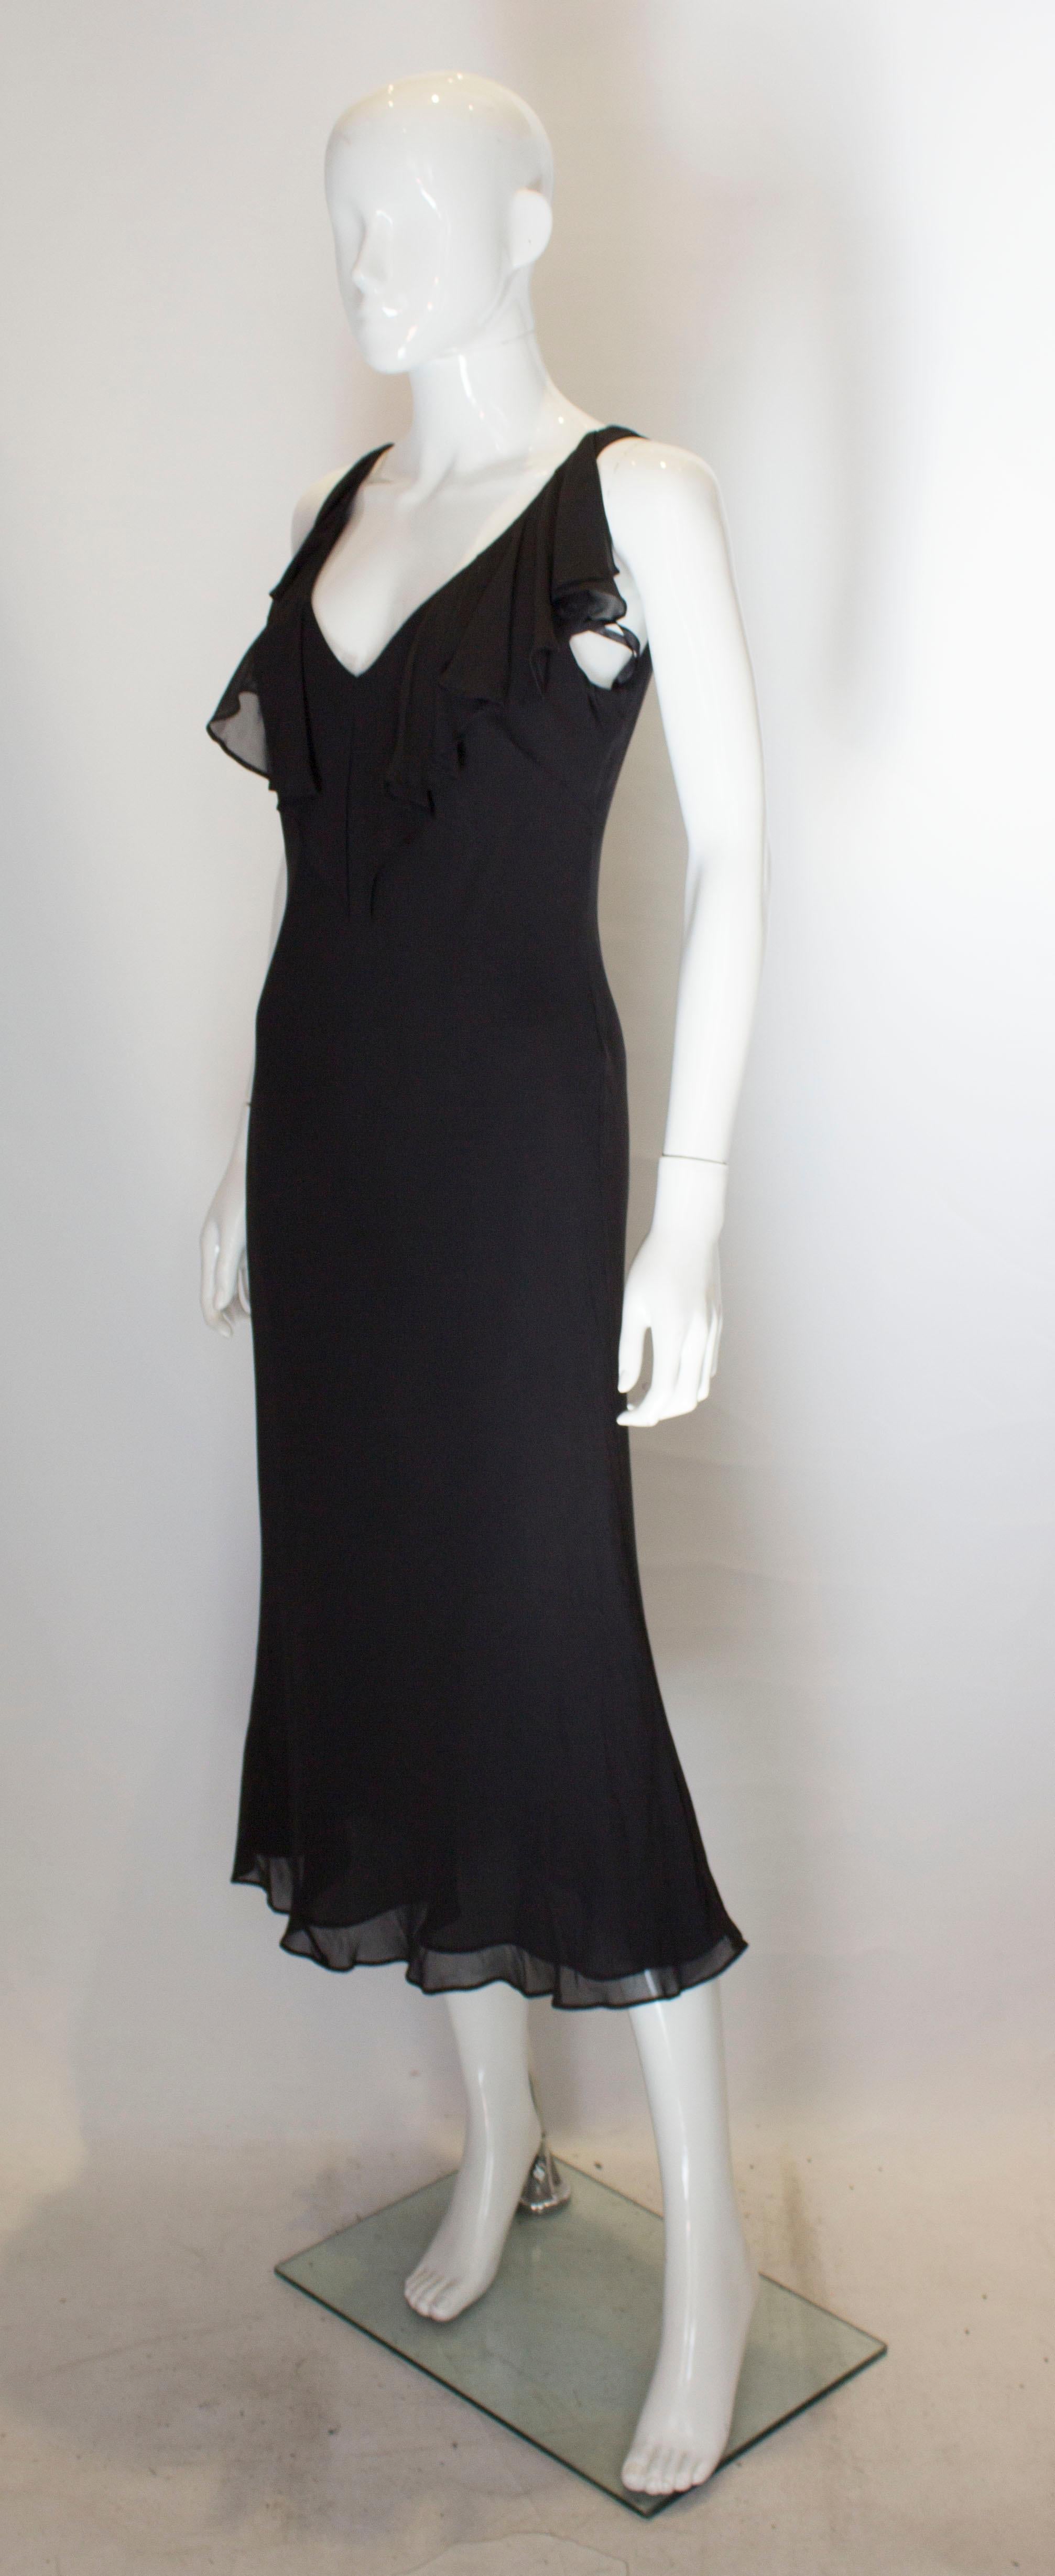 Black Vintage Slip Dress with Ruffle at Neckline For Sale